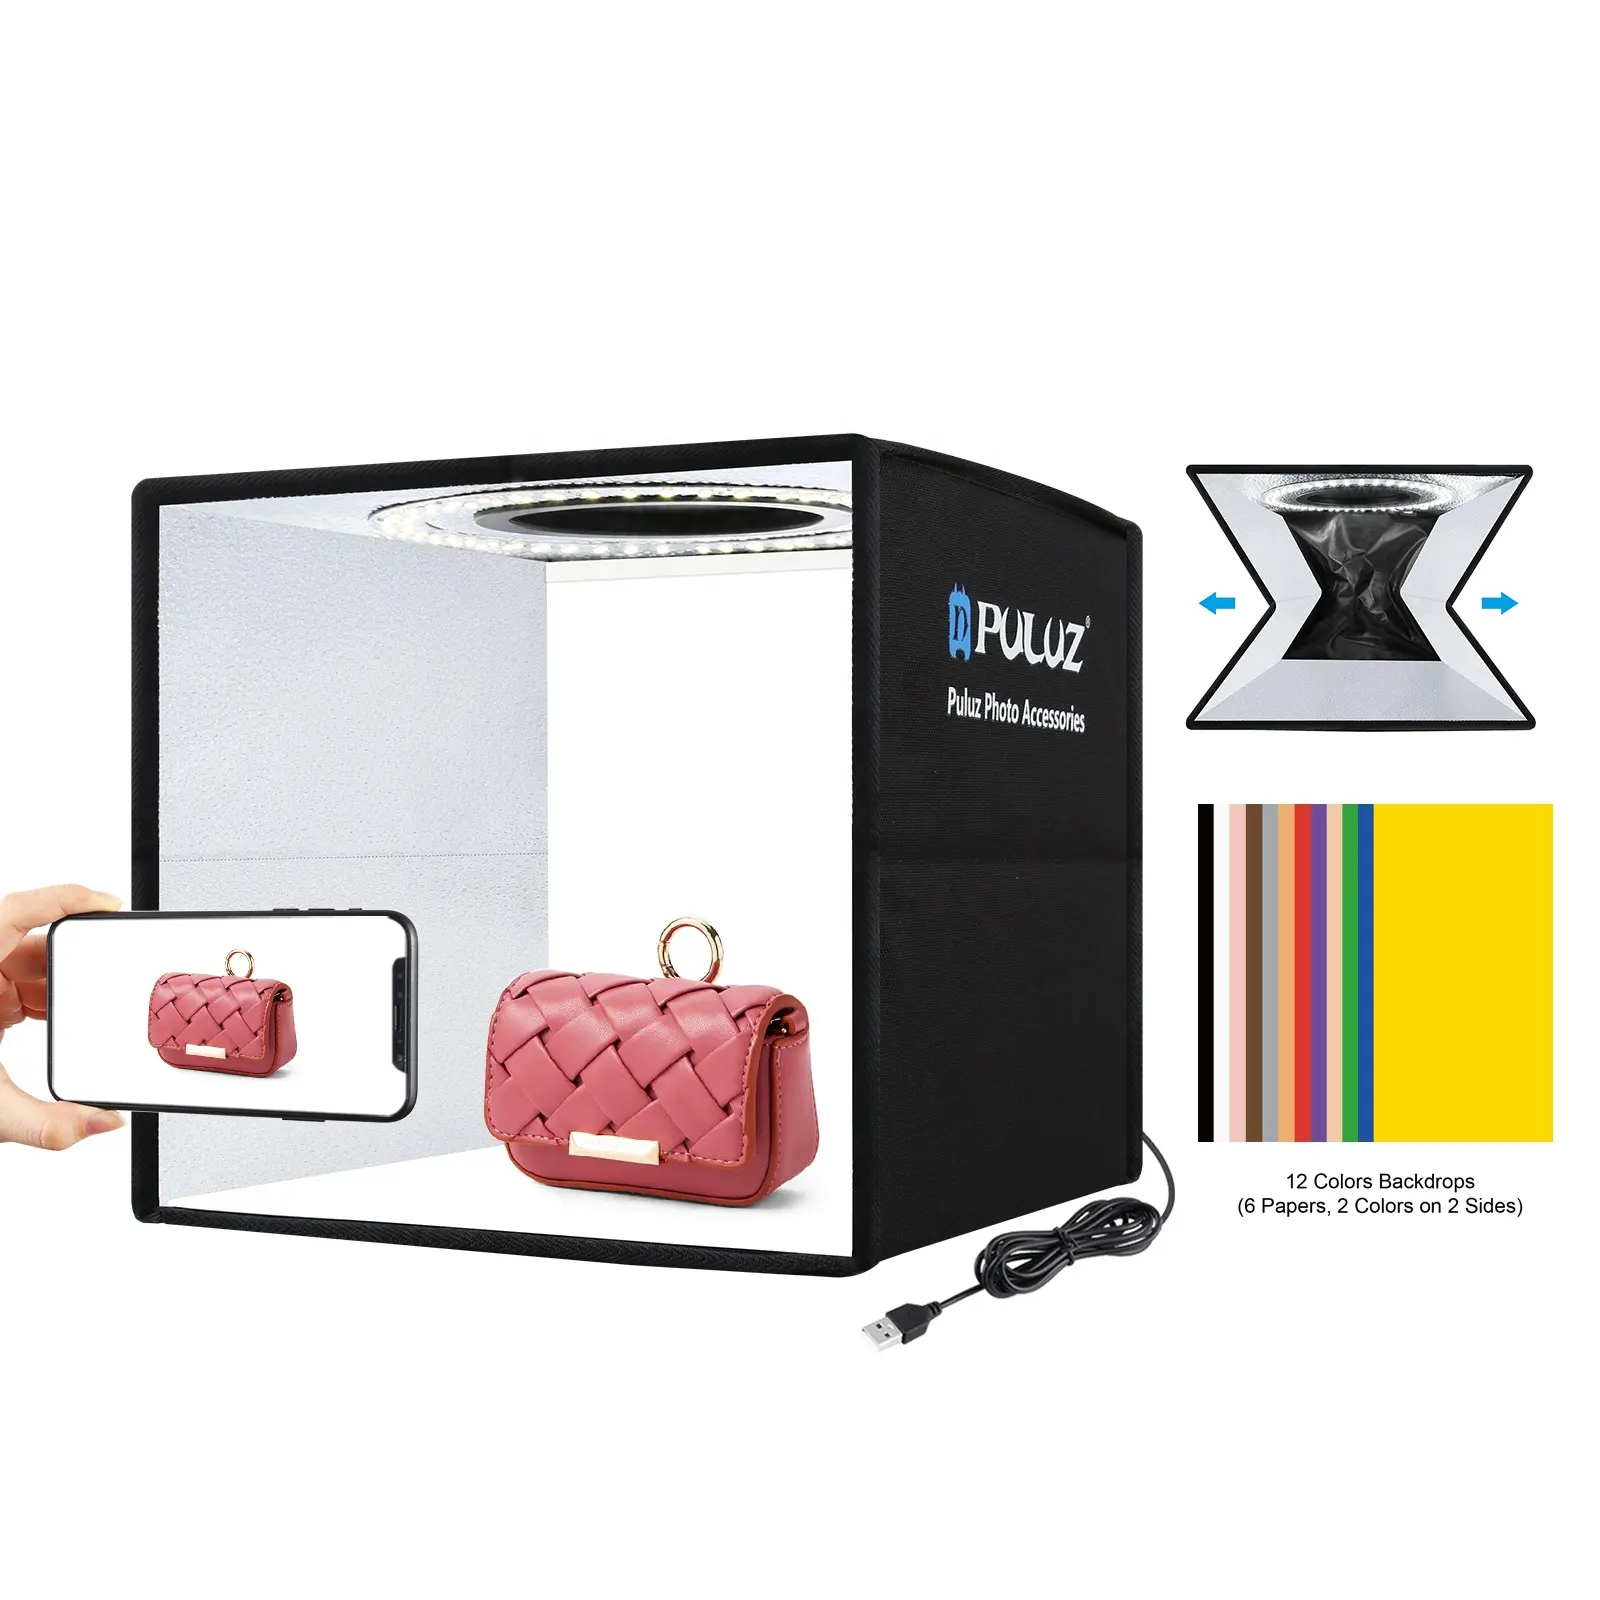 PULUZ Photography LED Lighting Box 25cm Folding Portable Photo Lighting Studio Shooting Tent Soft Box with 12 Colors Backdrops